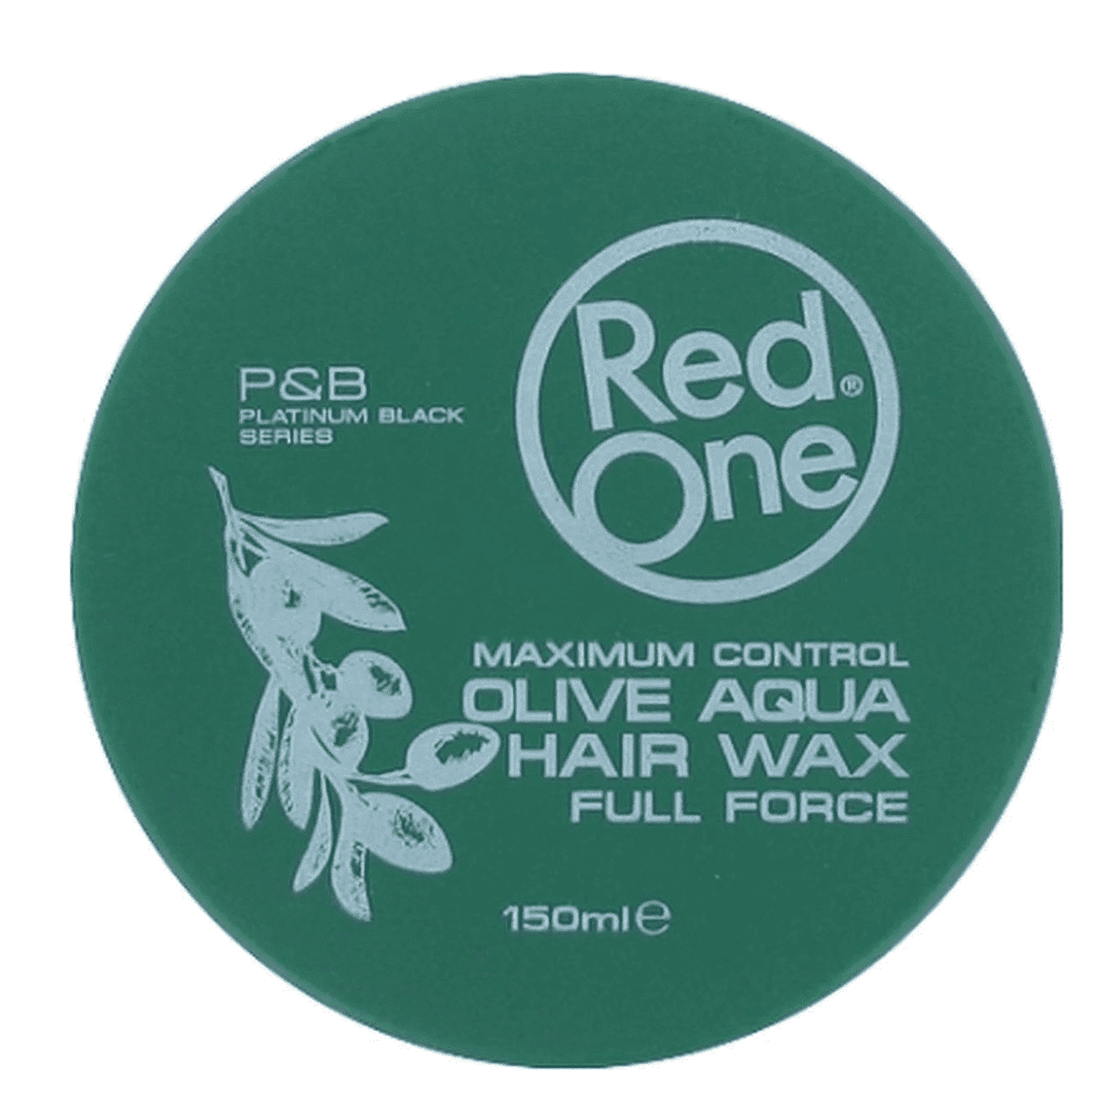 Red One Full Force Olive Aqua Wax 150ml